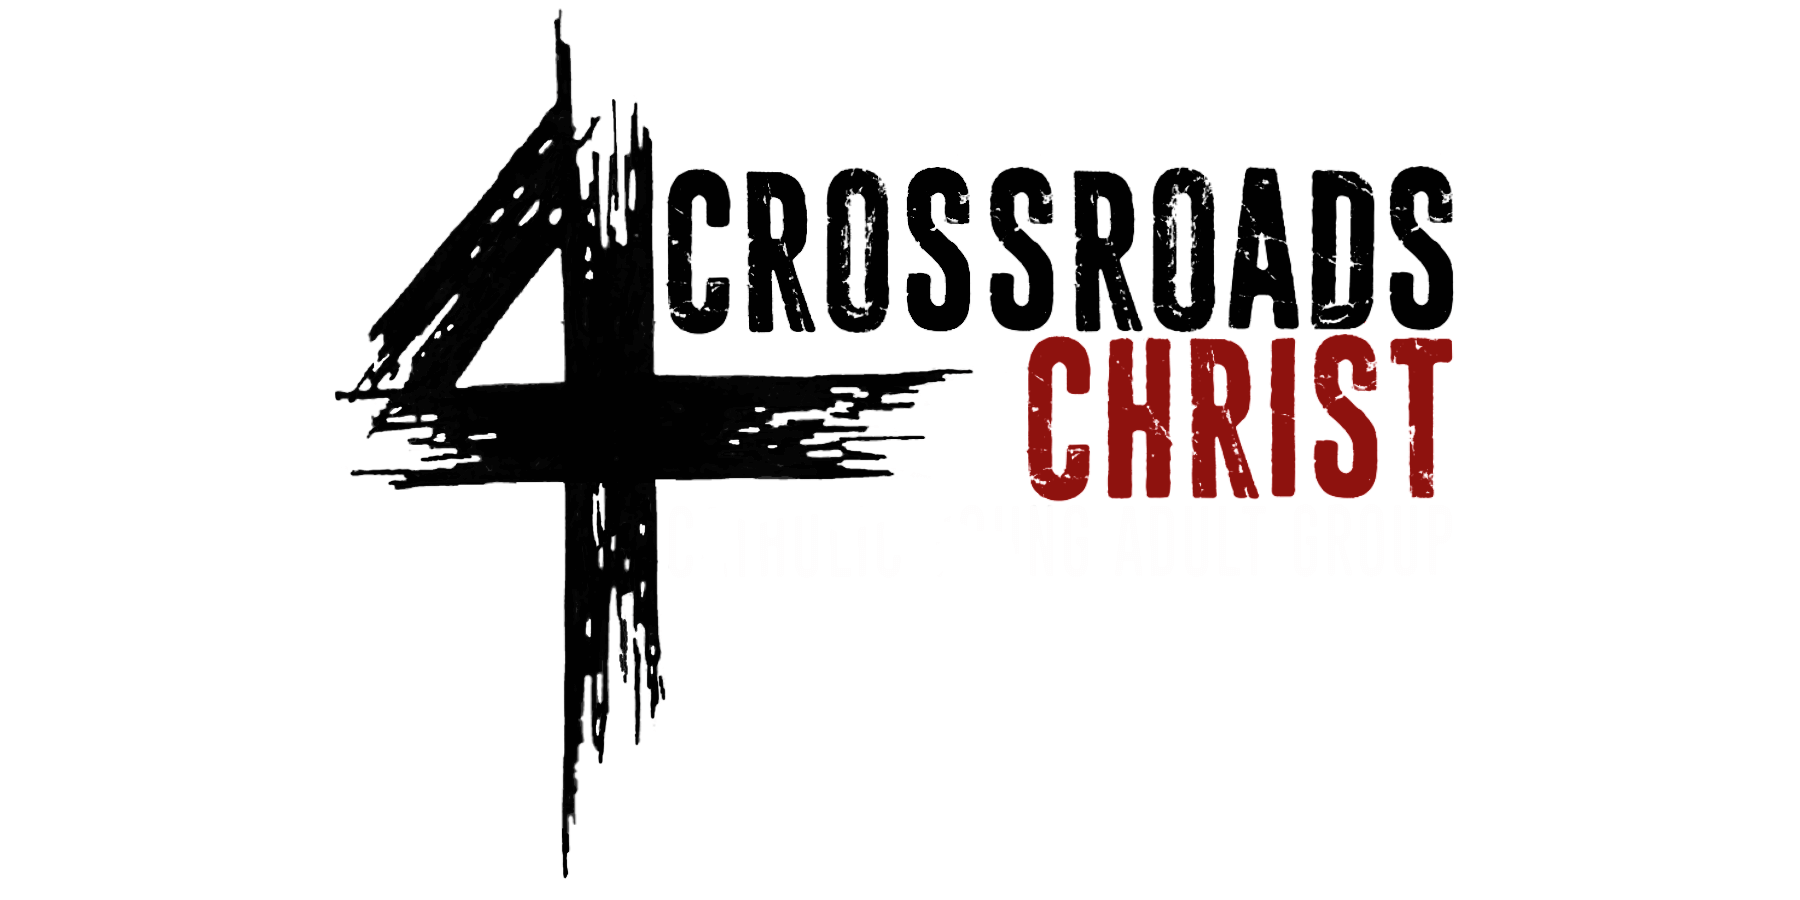 Crossroads 4 Christ - 